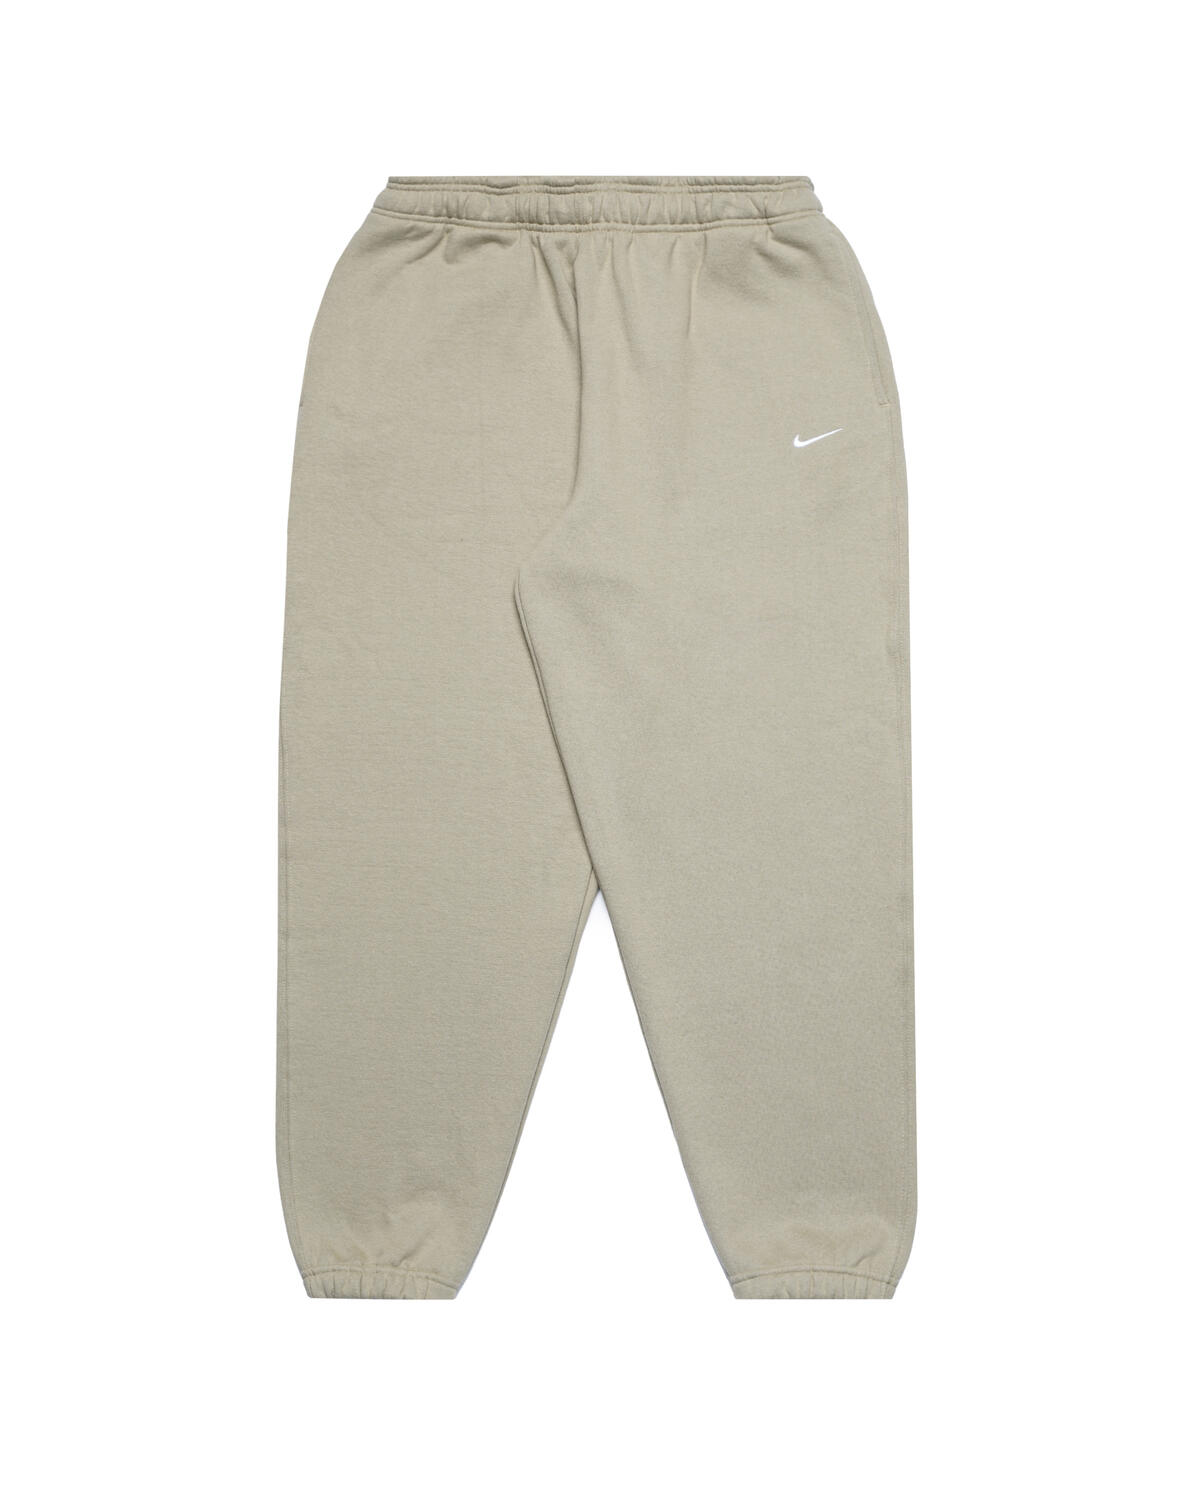 Nike NRG Made in the USA Fleece Pants, DH5050-247